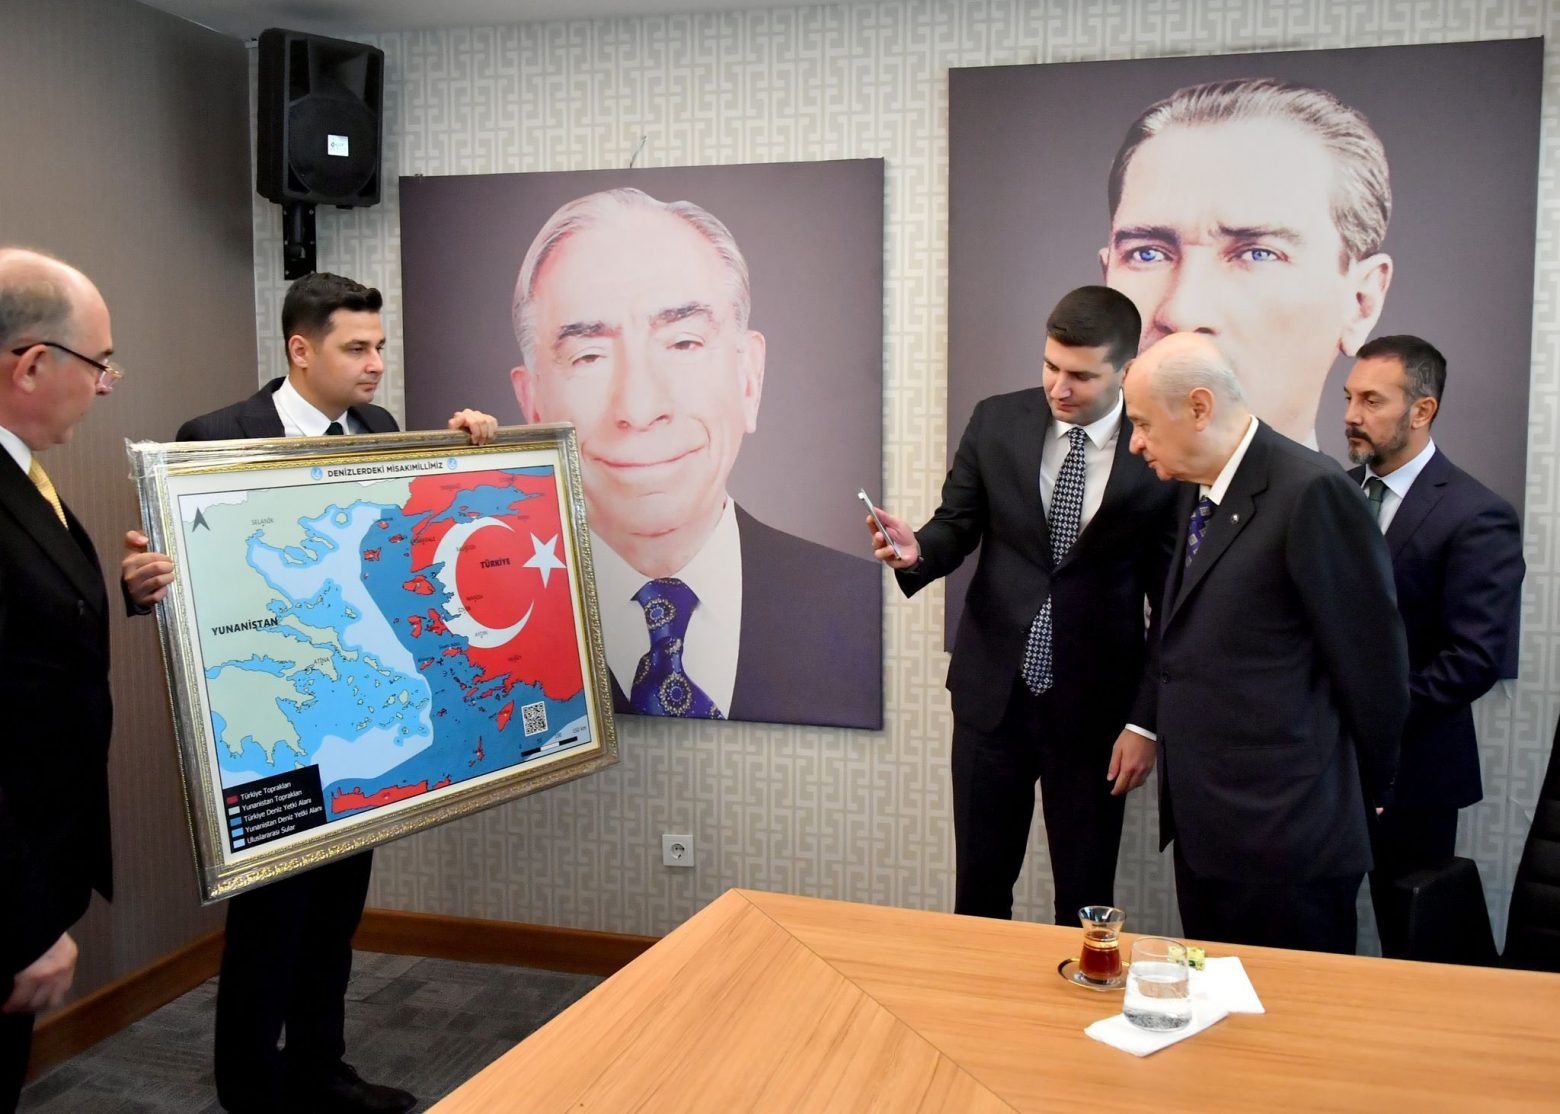 Erdogan’s junior partner’s proclivity draws the ire of Athens